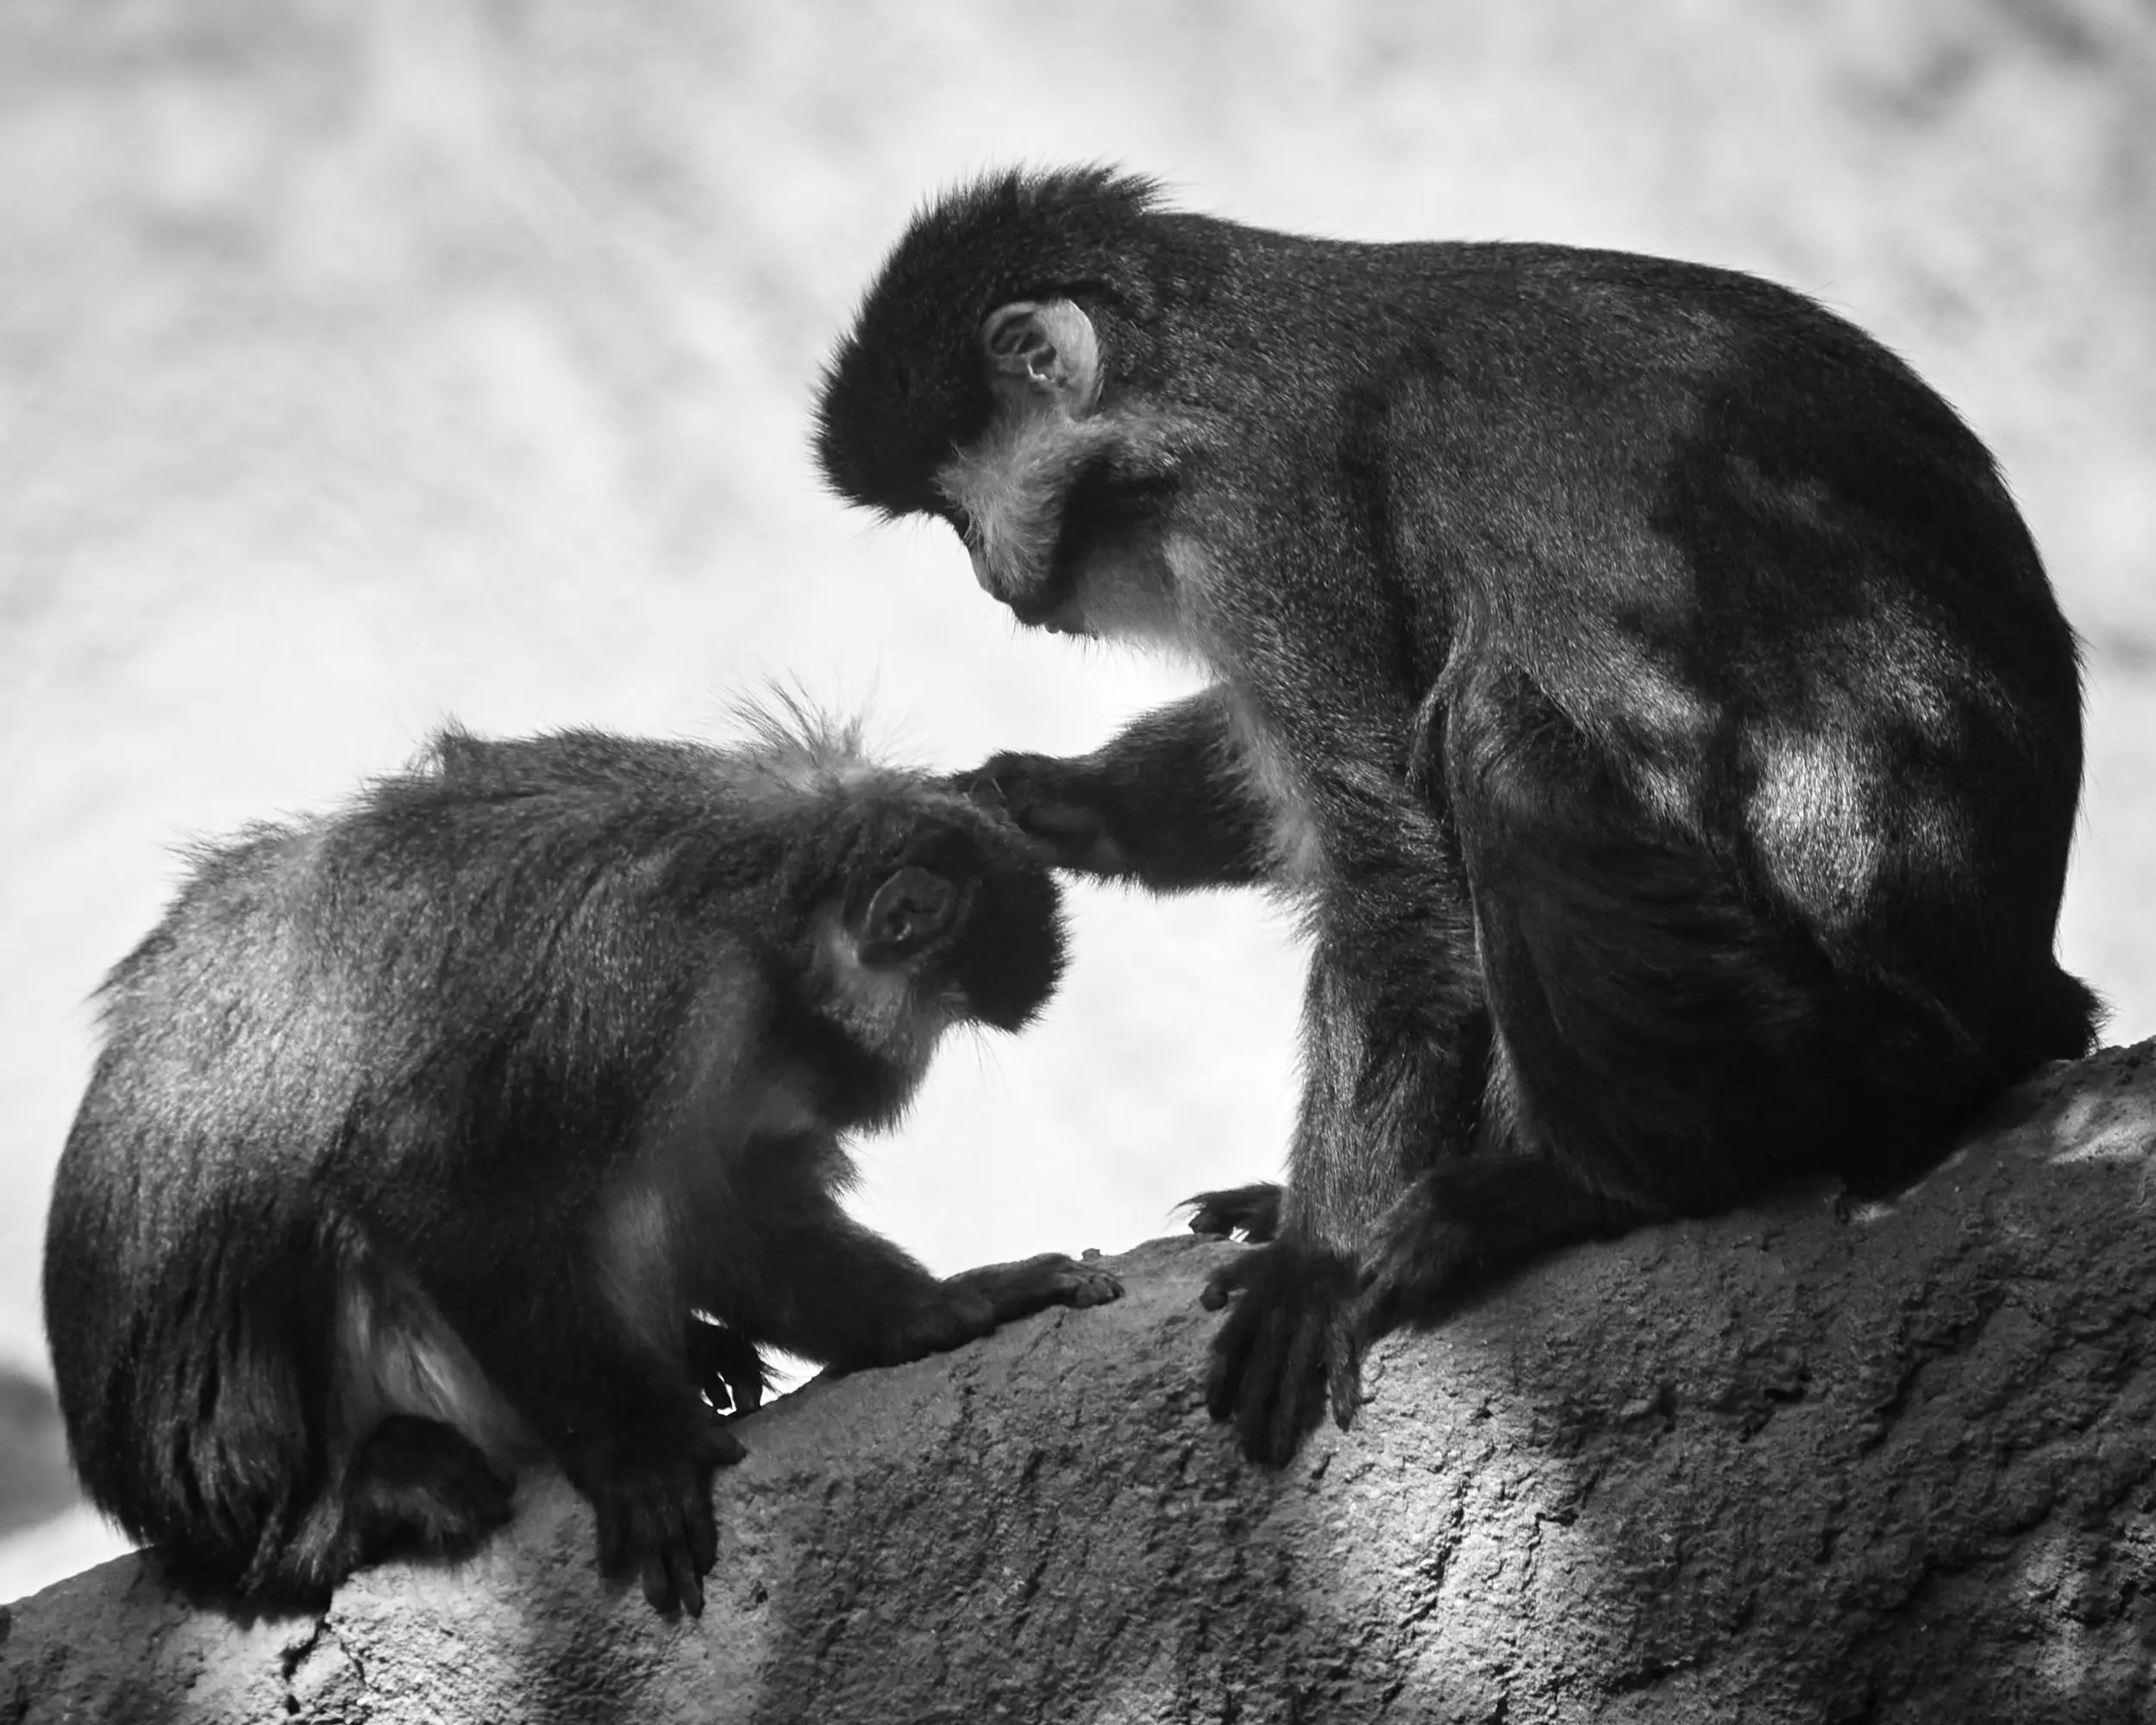 Two monkeys inspect each other's fur.